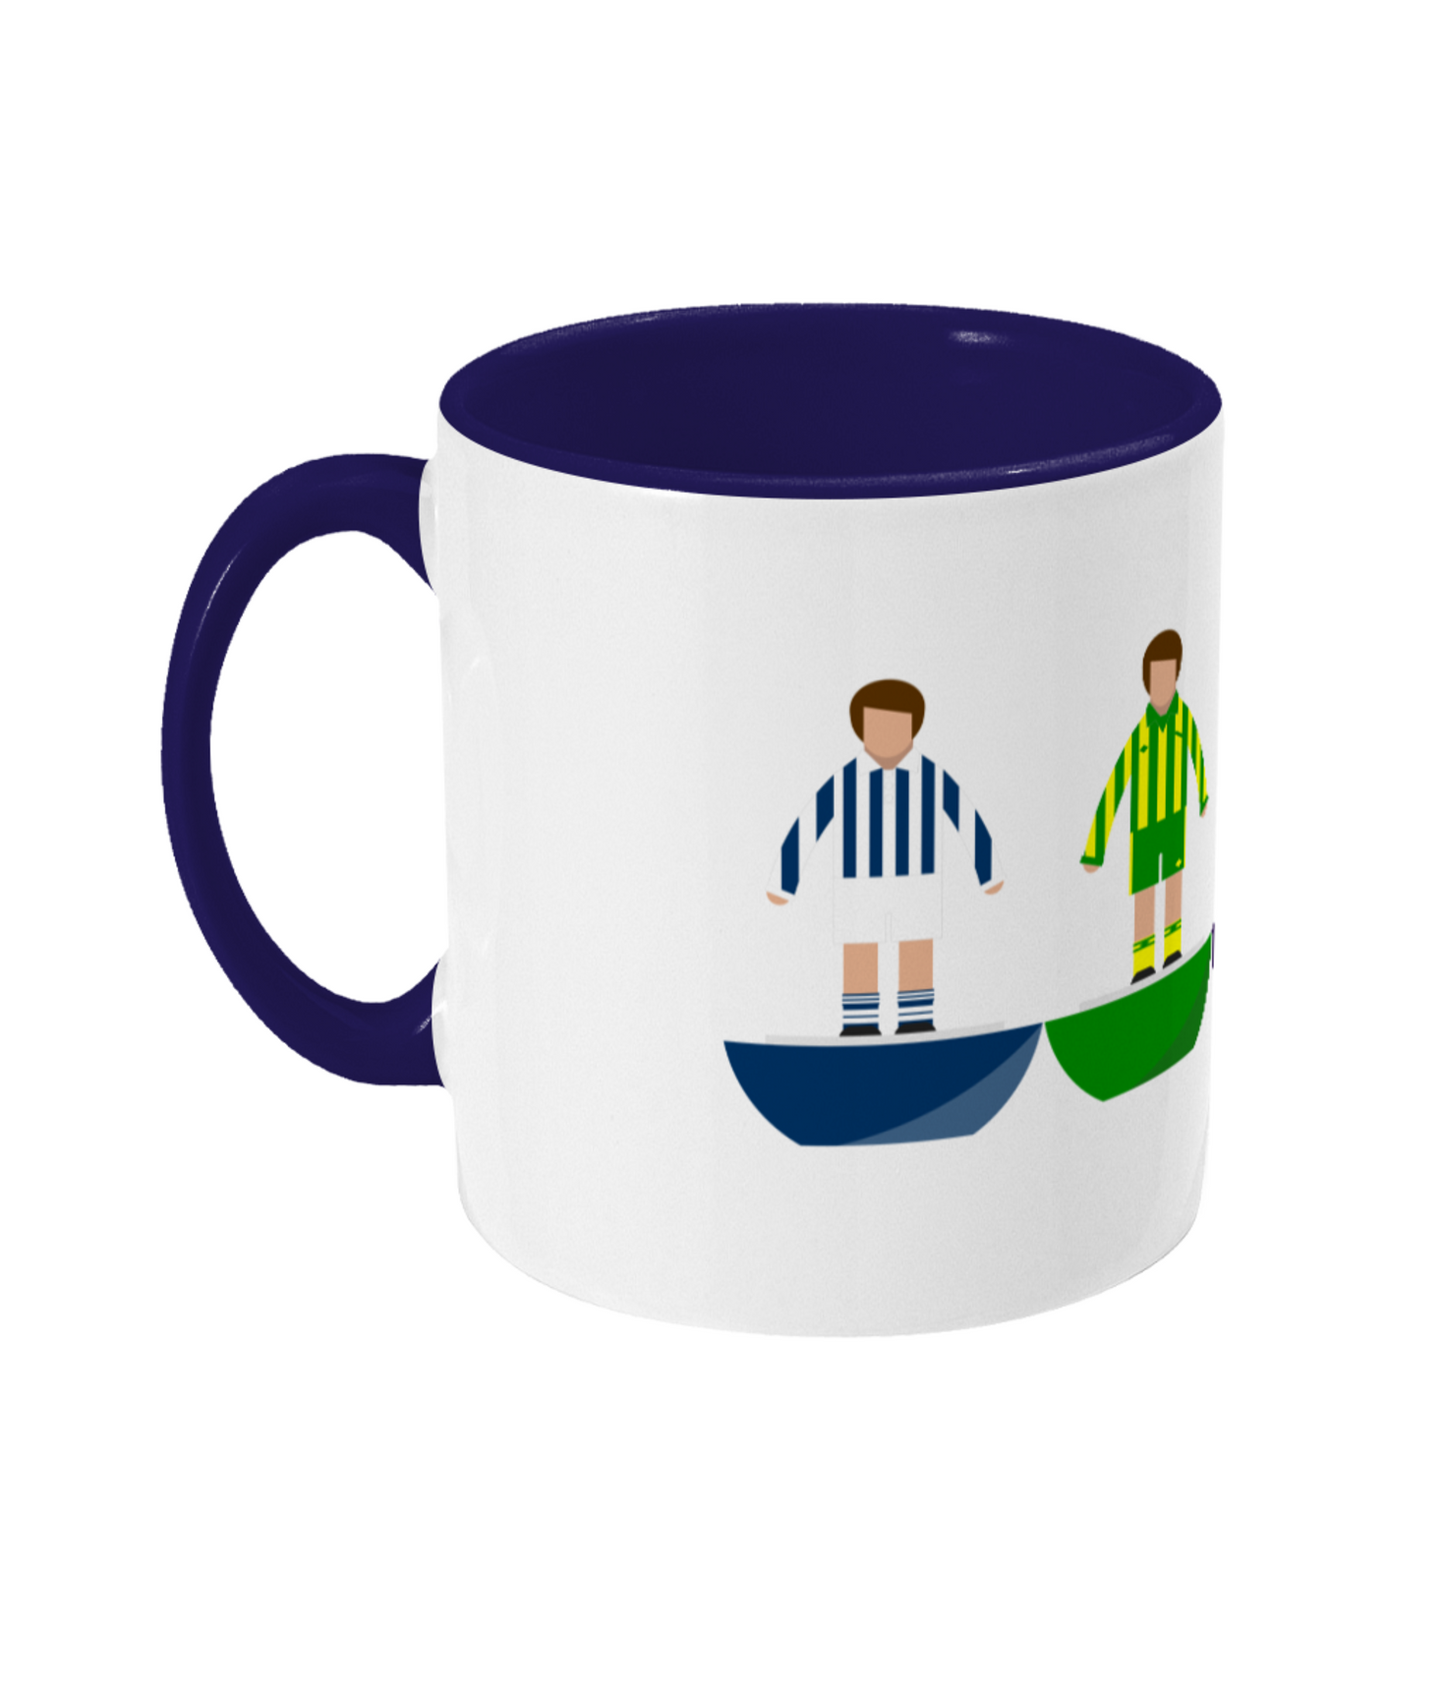 Football Kits 'West Brom combined' Mug